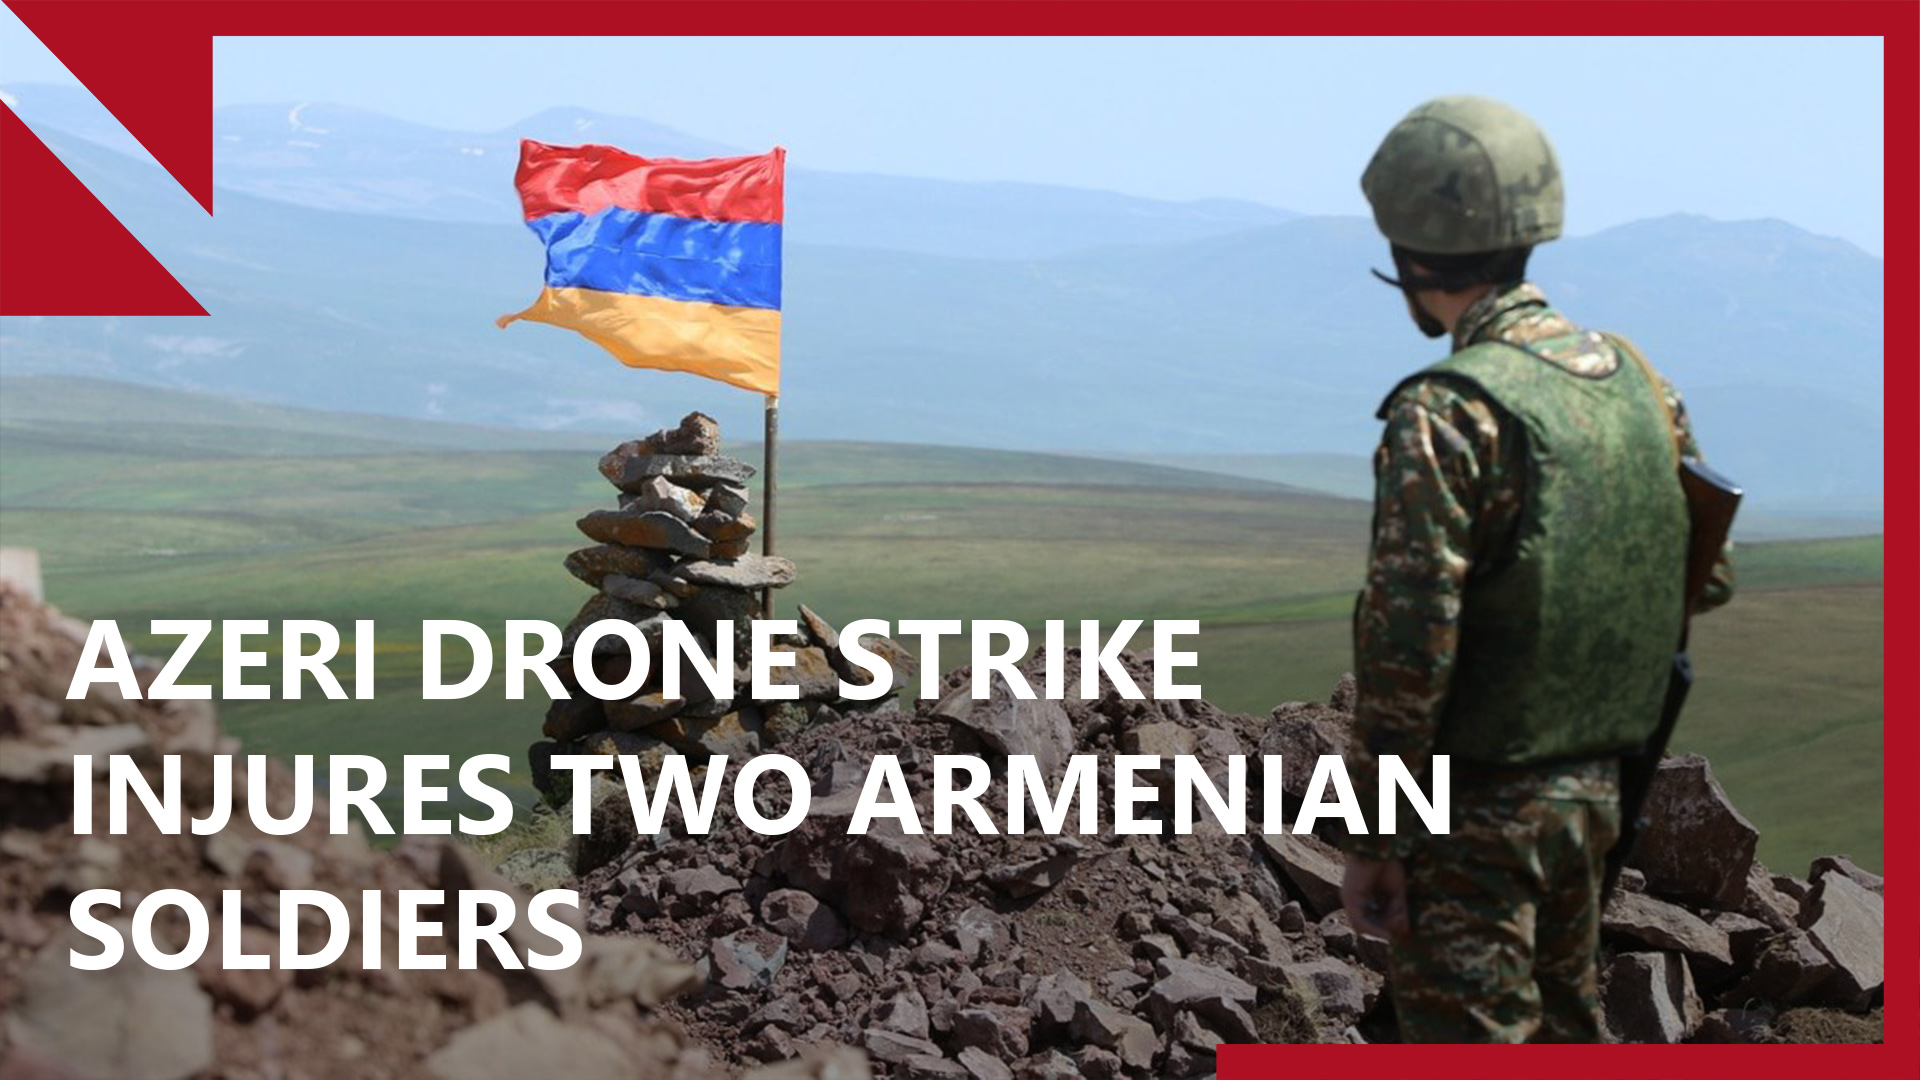 Azerbaijani drone strike injures two servicemen in Armenia